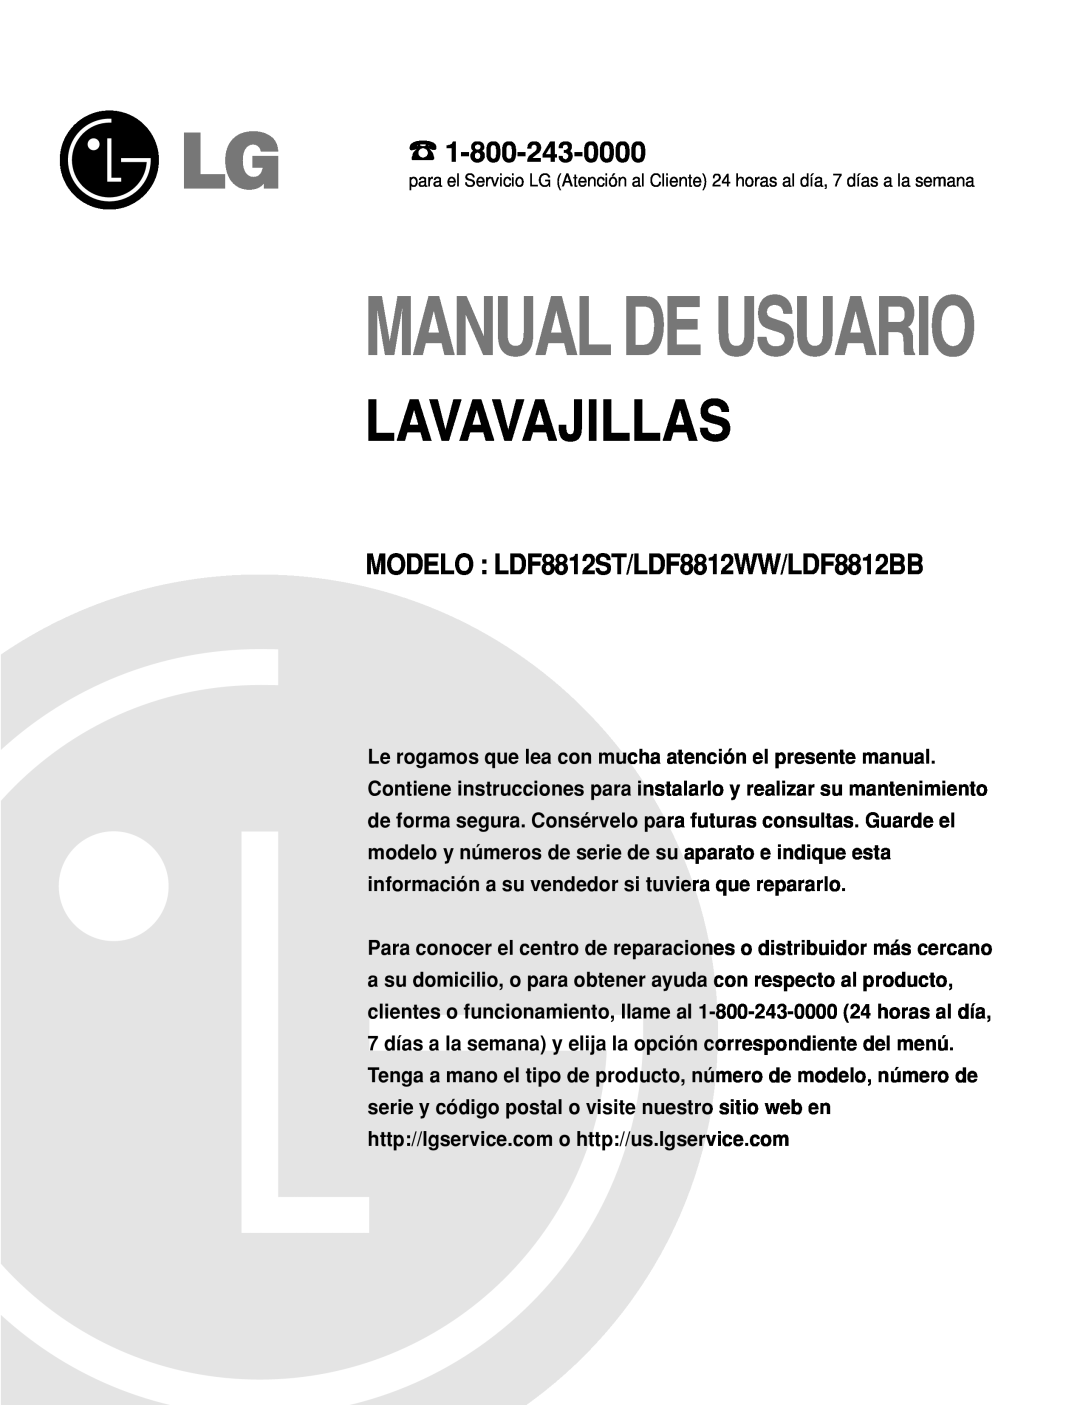 LG Electronics manual MODELO LDF8812ST/LDF8812WW/LDF8812BB 